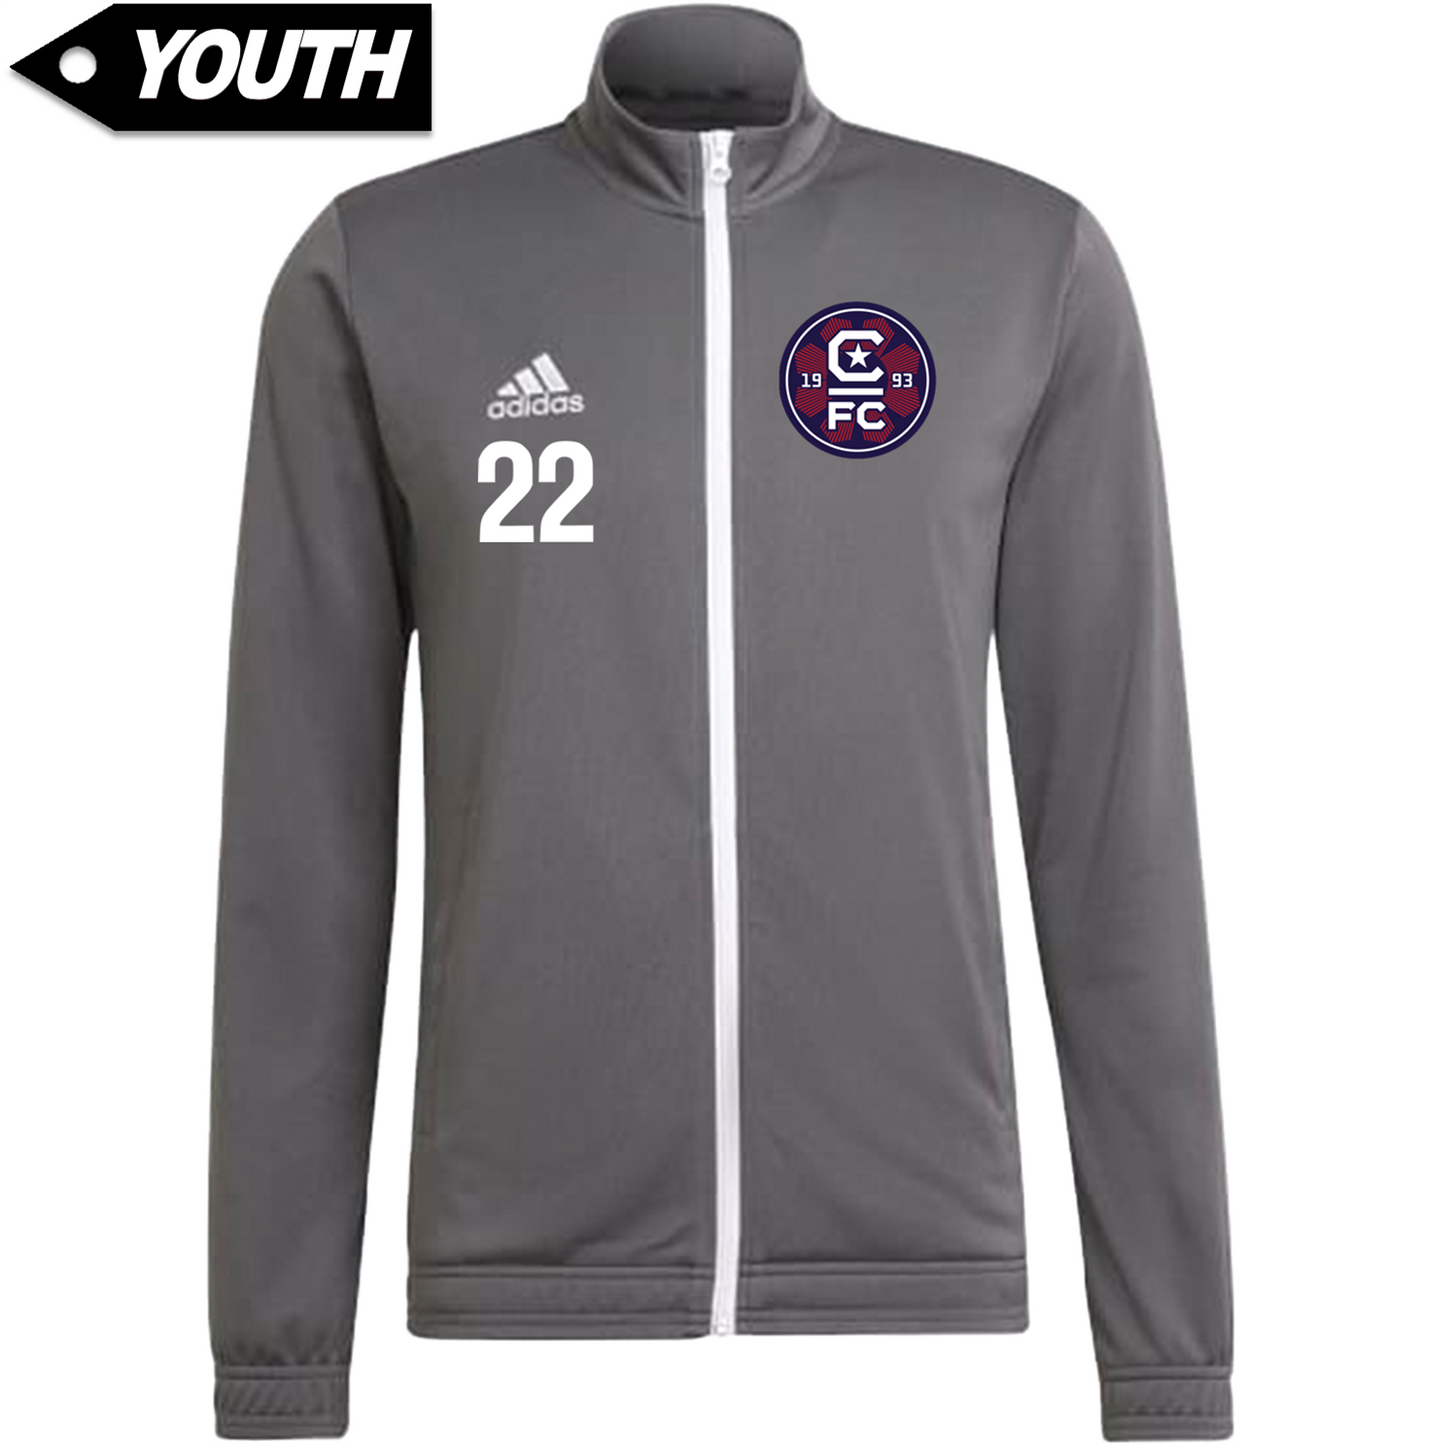 Capital FC Jacket [Youth]